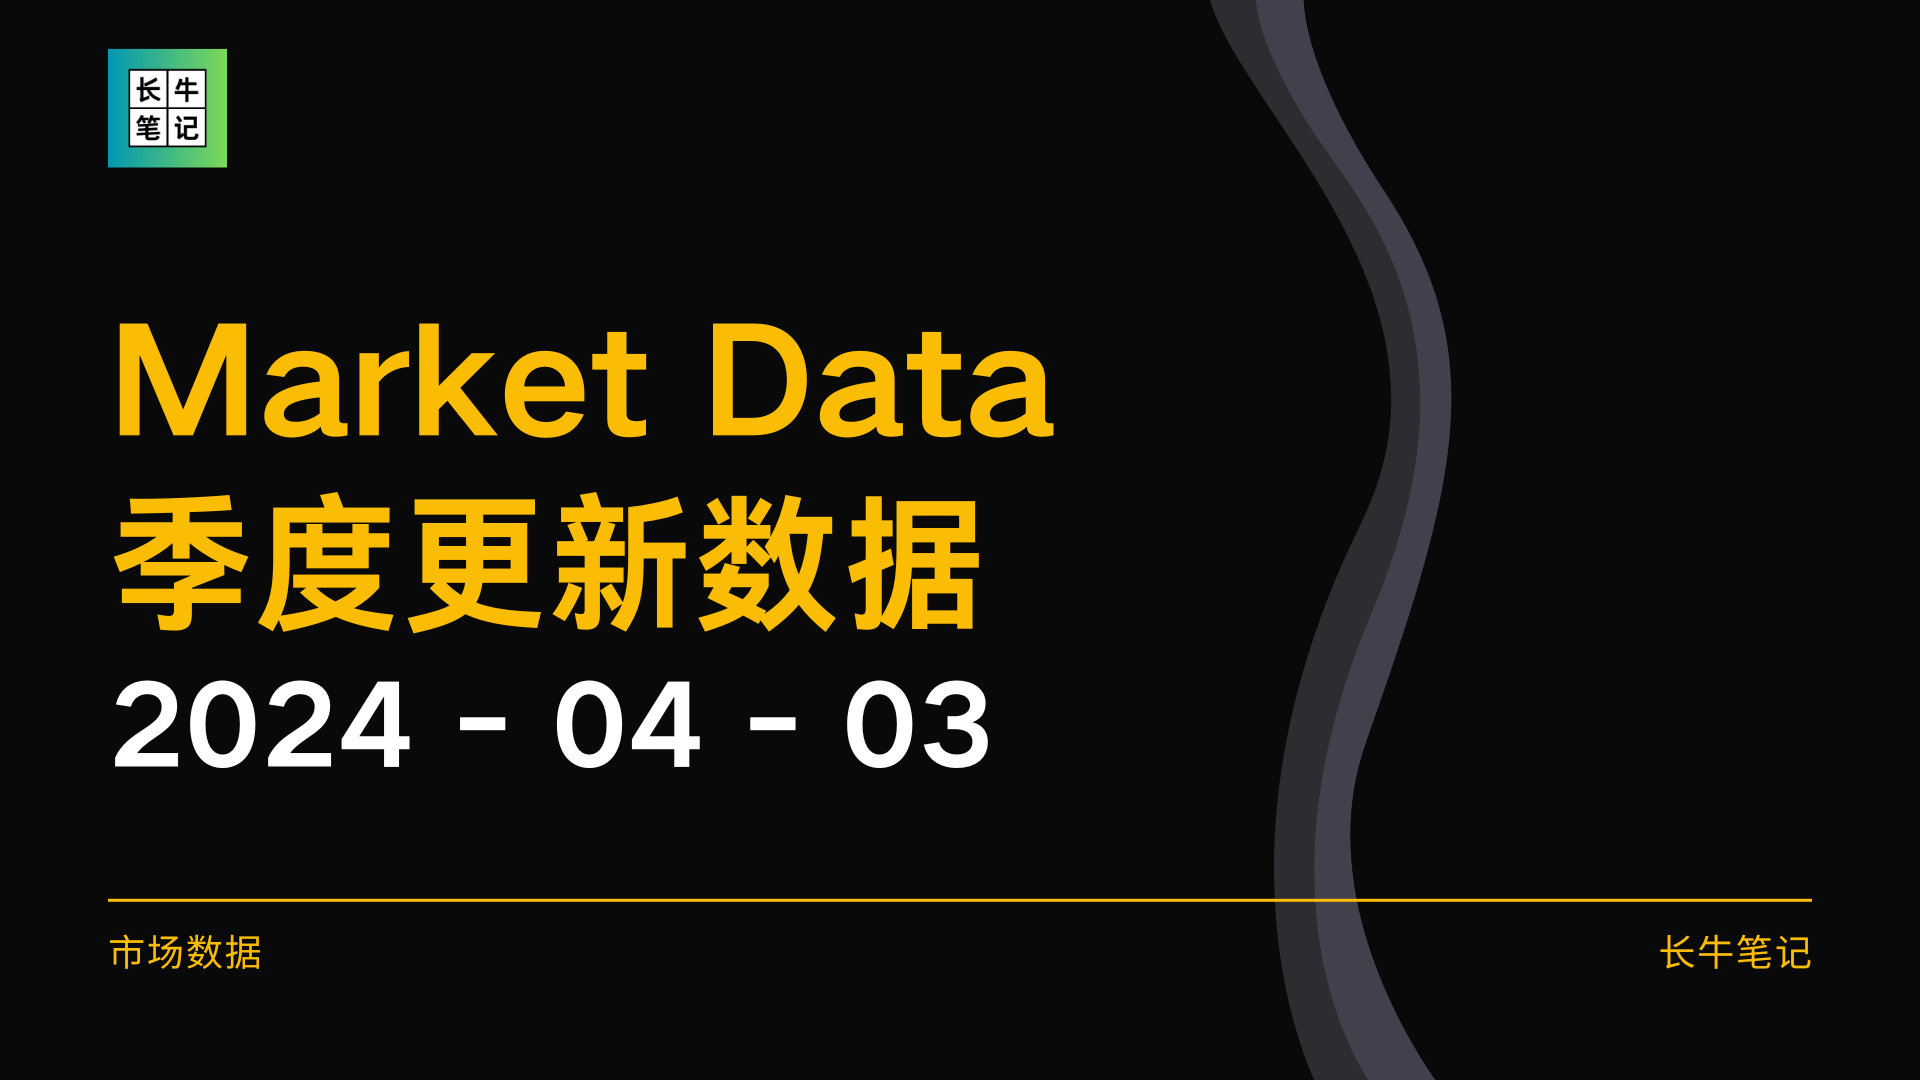 Market Data 季度更新数据 24-04-03